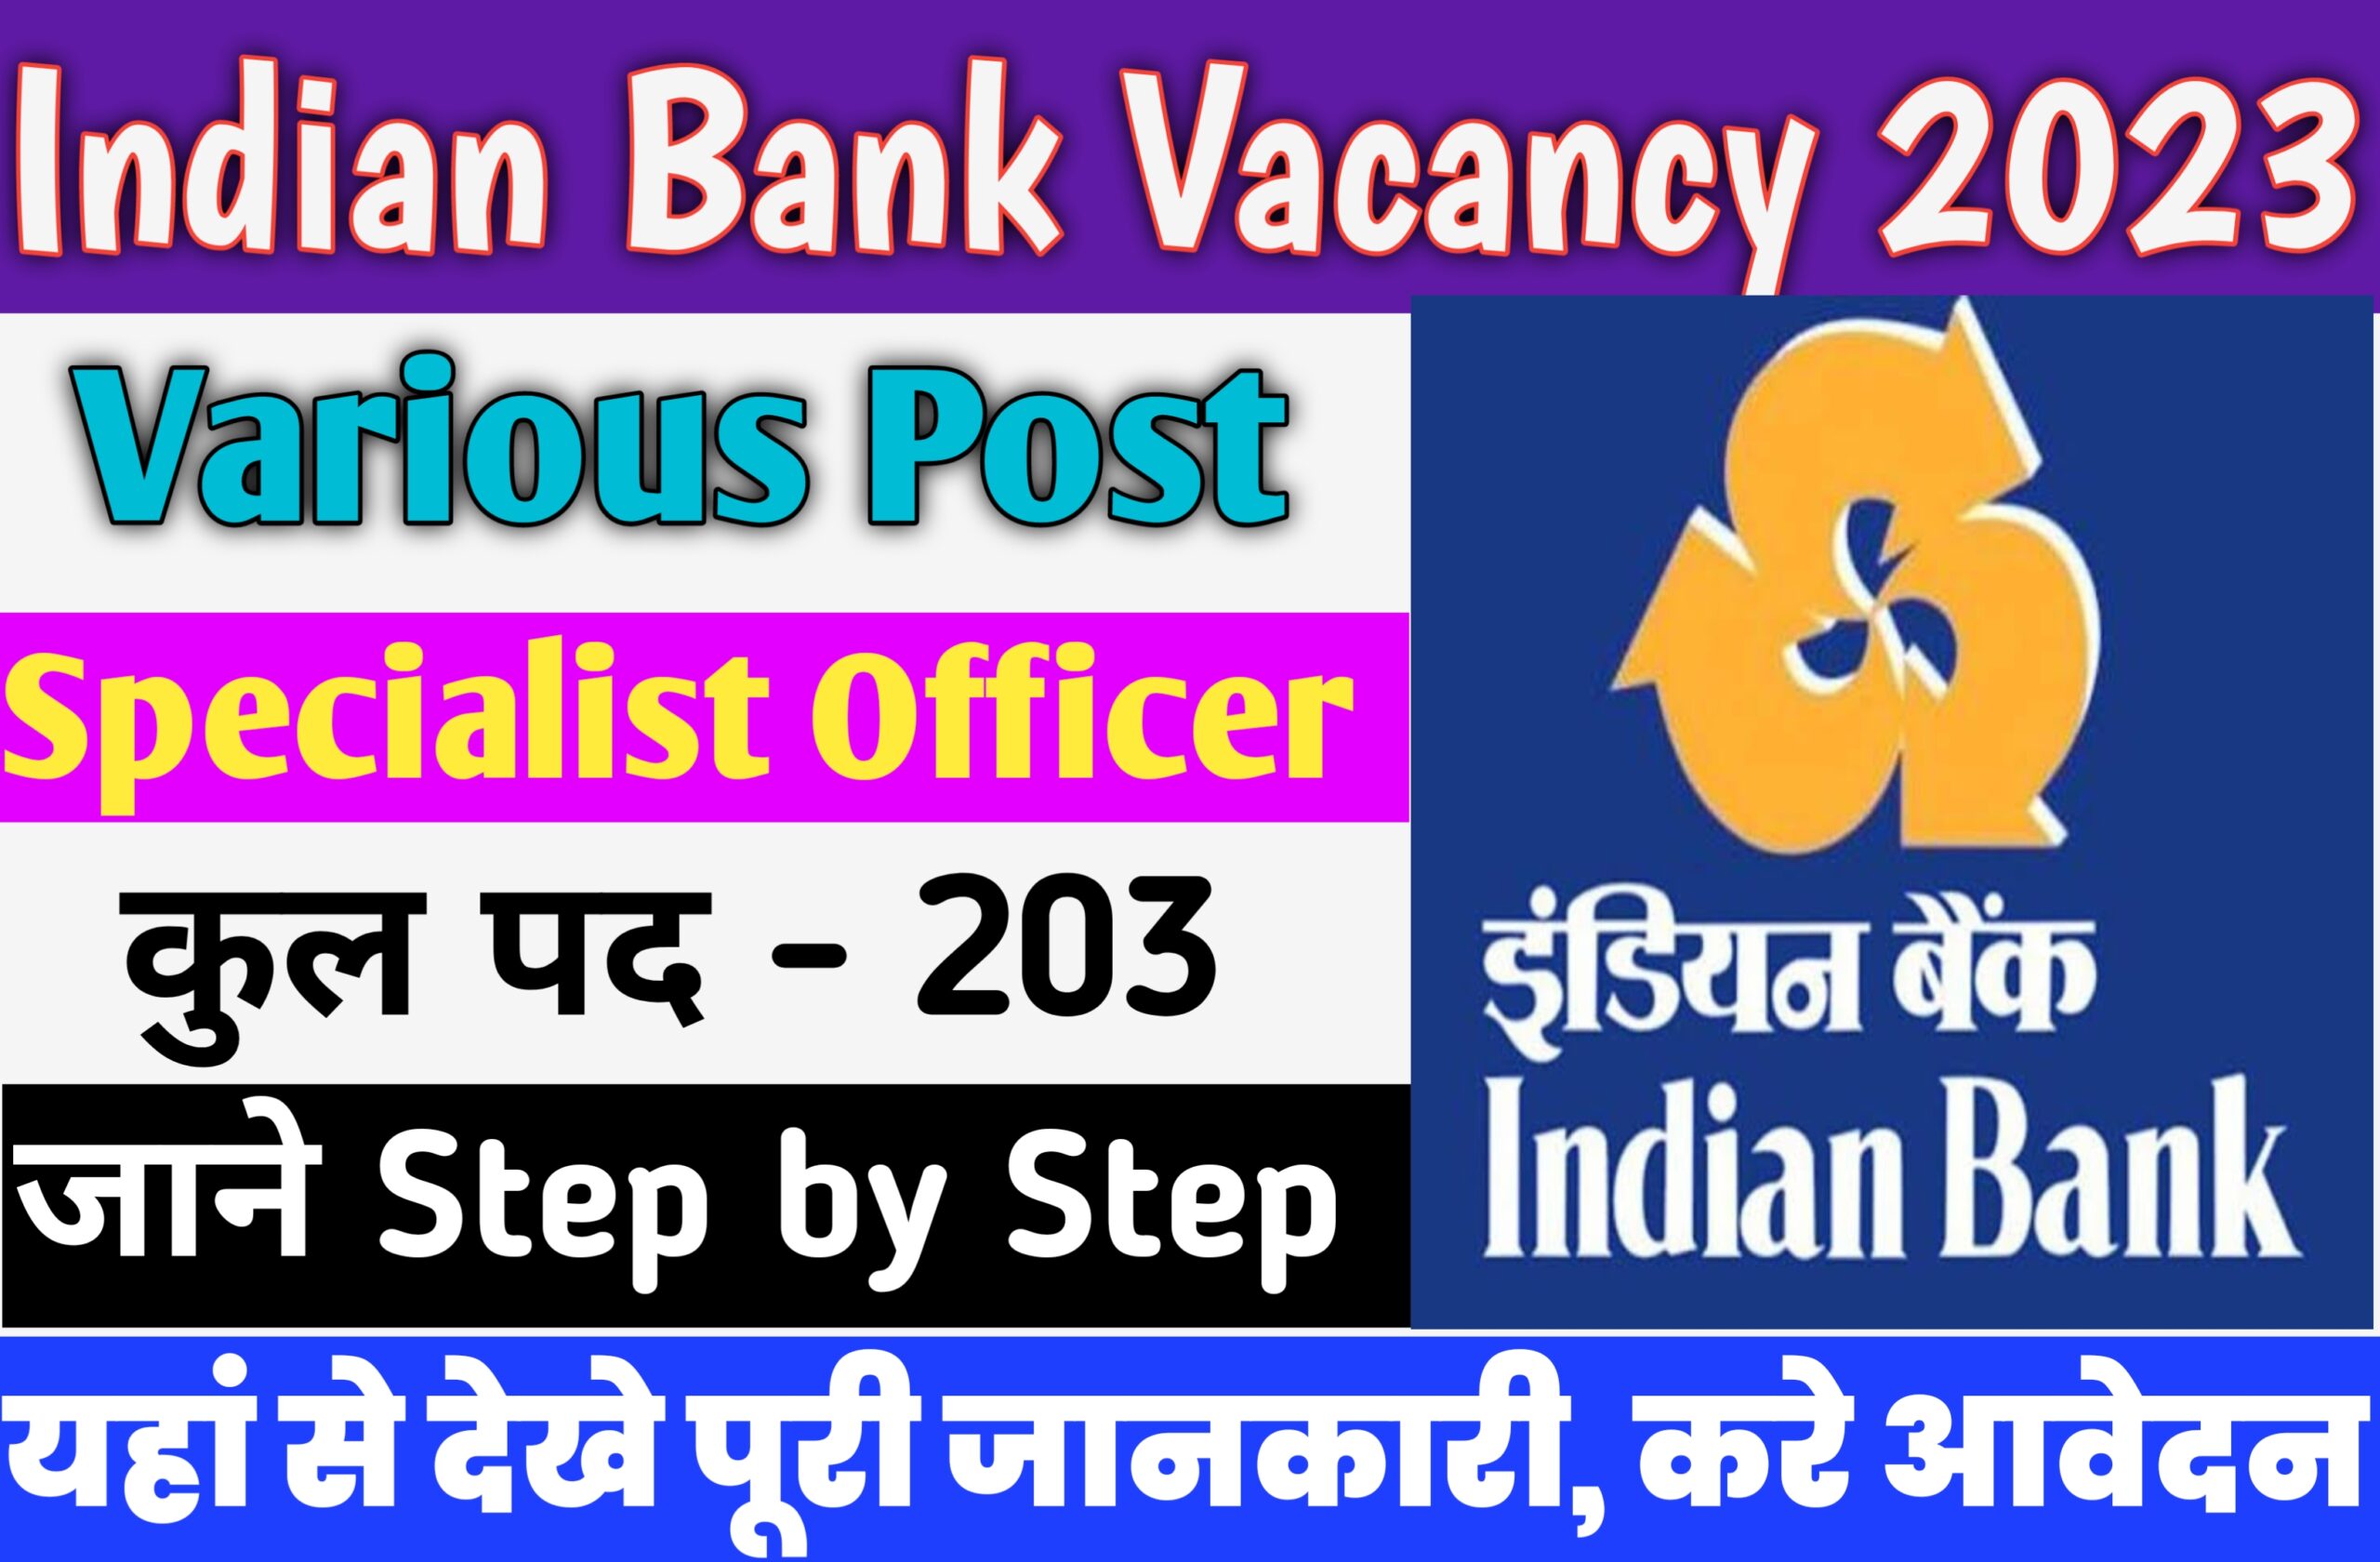 Indian Bank Vacancy 2023